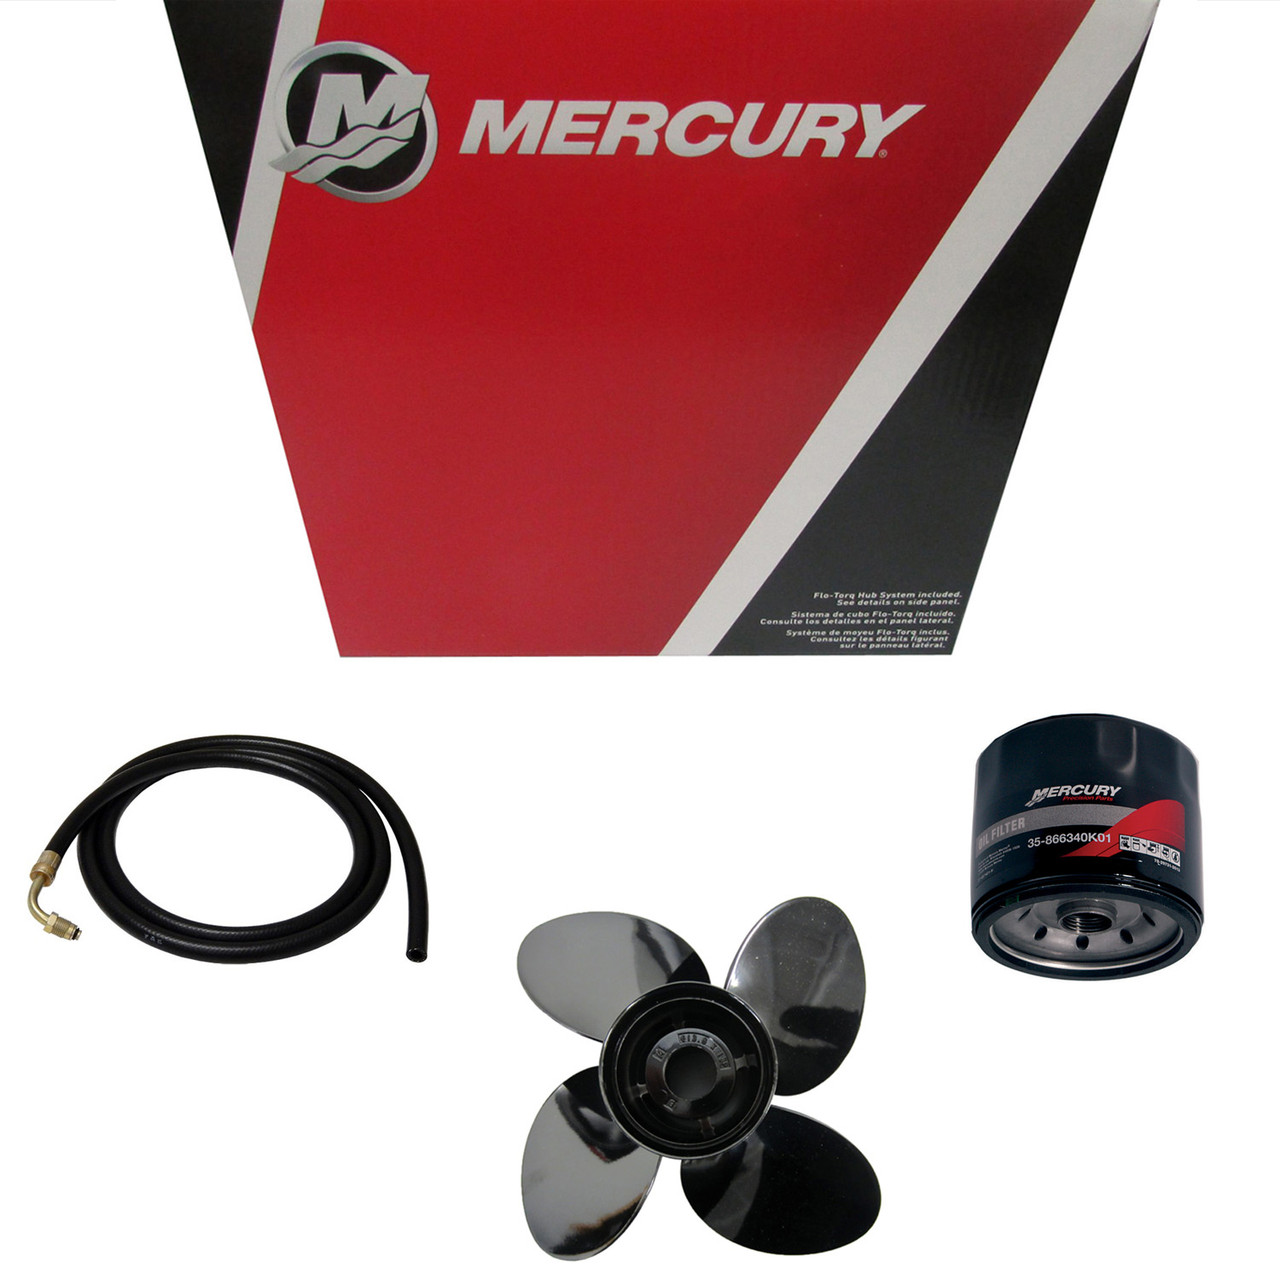 Mercury Marine/Mercruiser New OEM STATOR KIT 398-832075A8